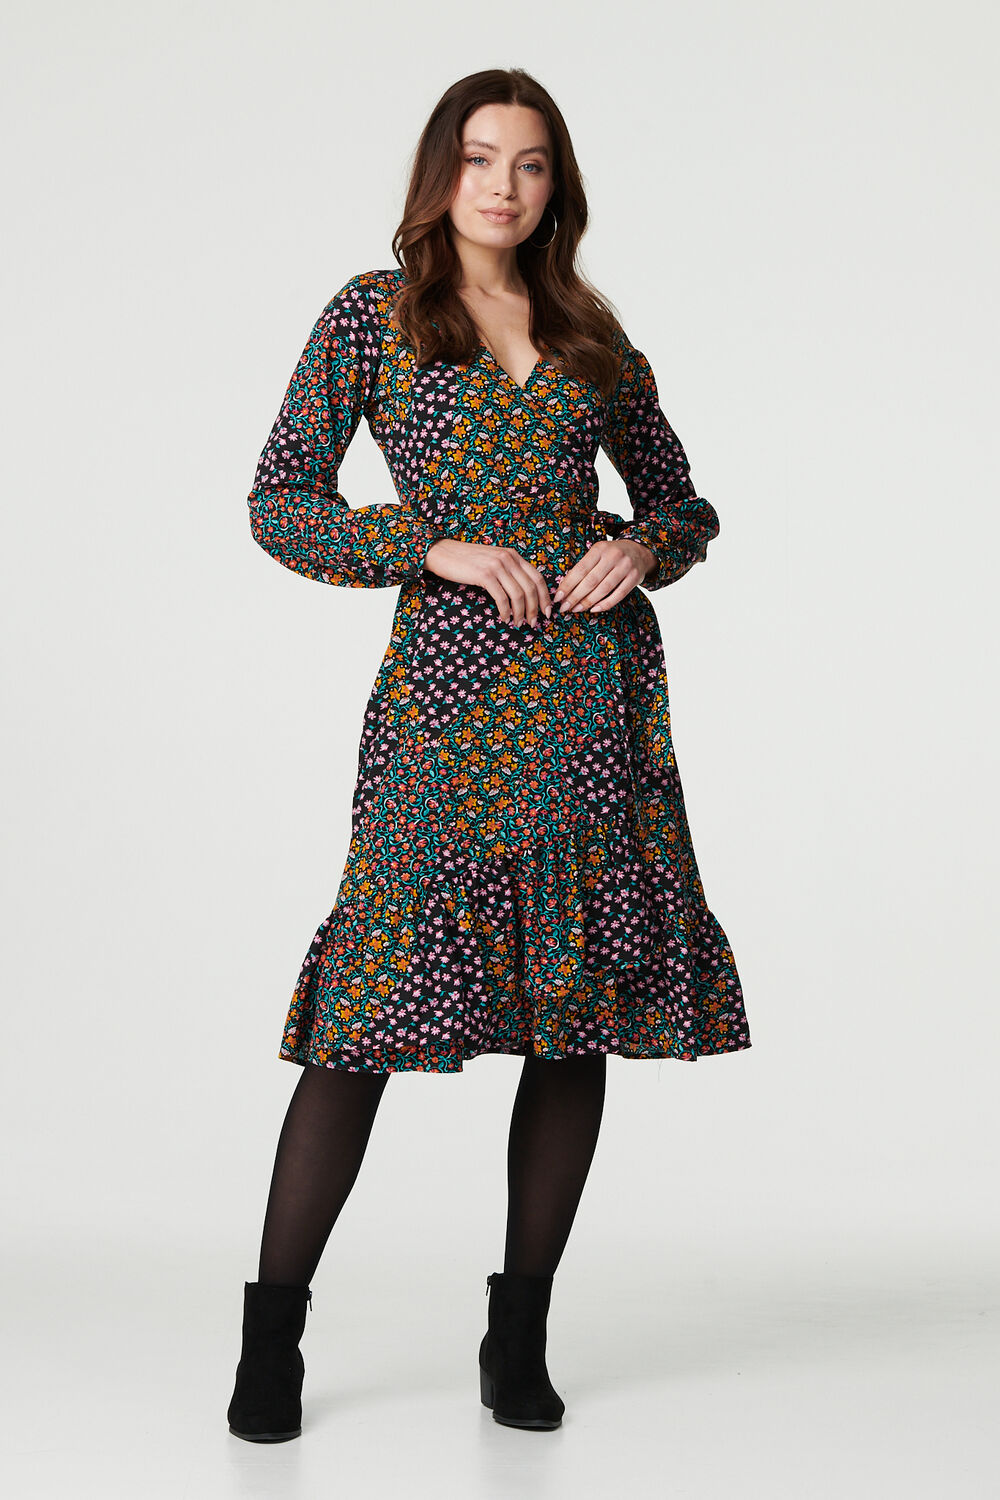 Izabel London Black - Patchwork Print Ruffled Wrap Dress, Size: 14